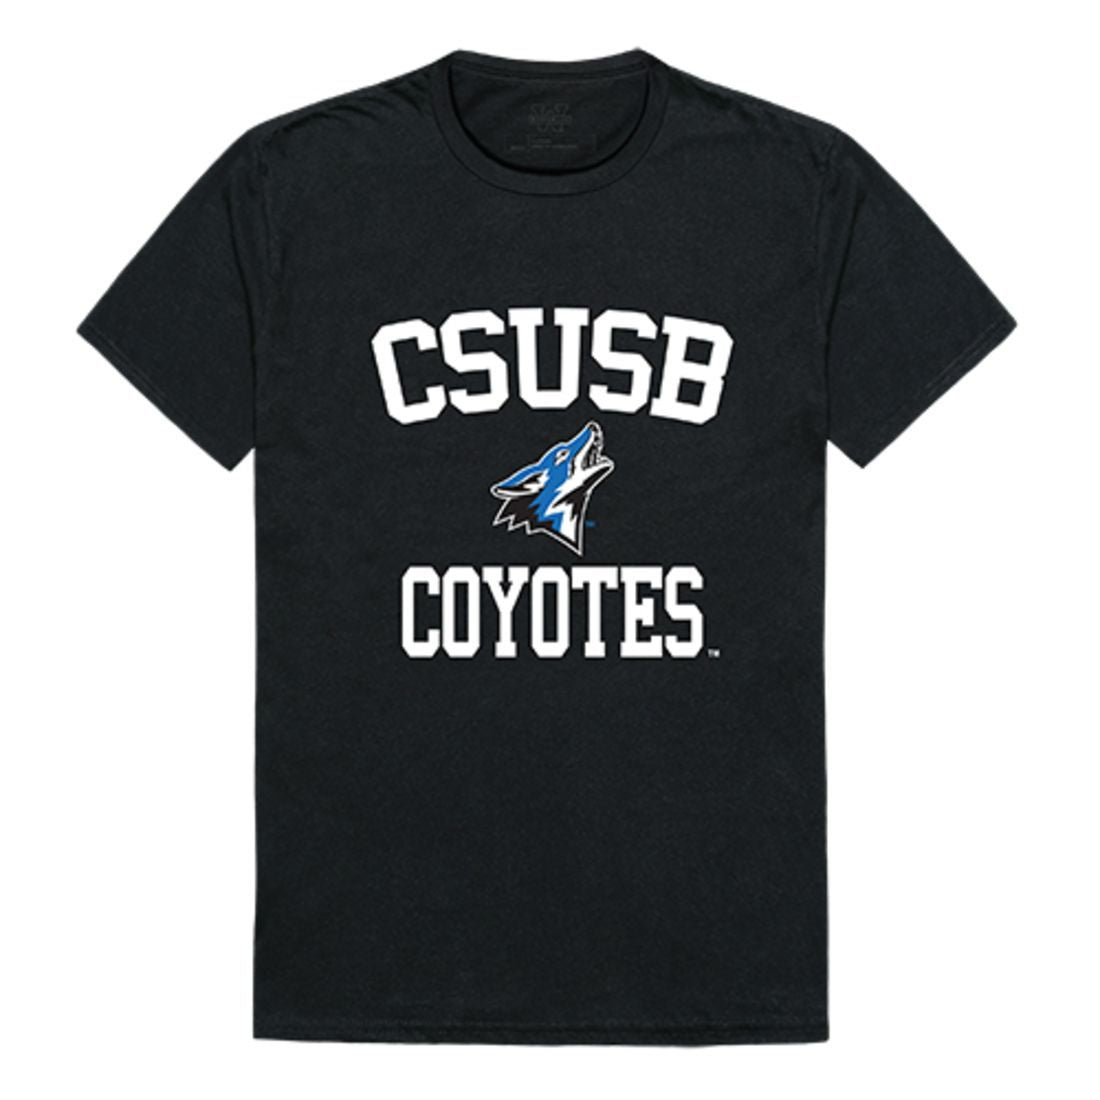 Vive La Fete Youth Blue Cal State San Bernardino Coyotes Stripes T-Shirt Size: Medium